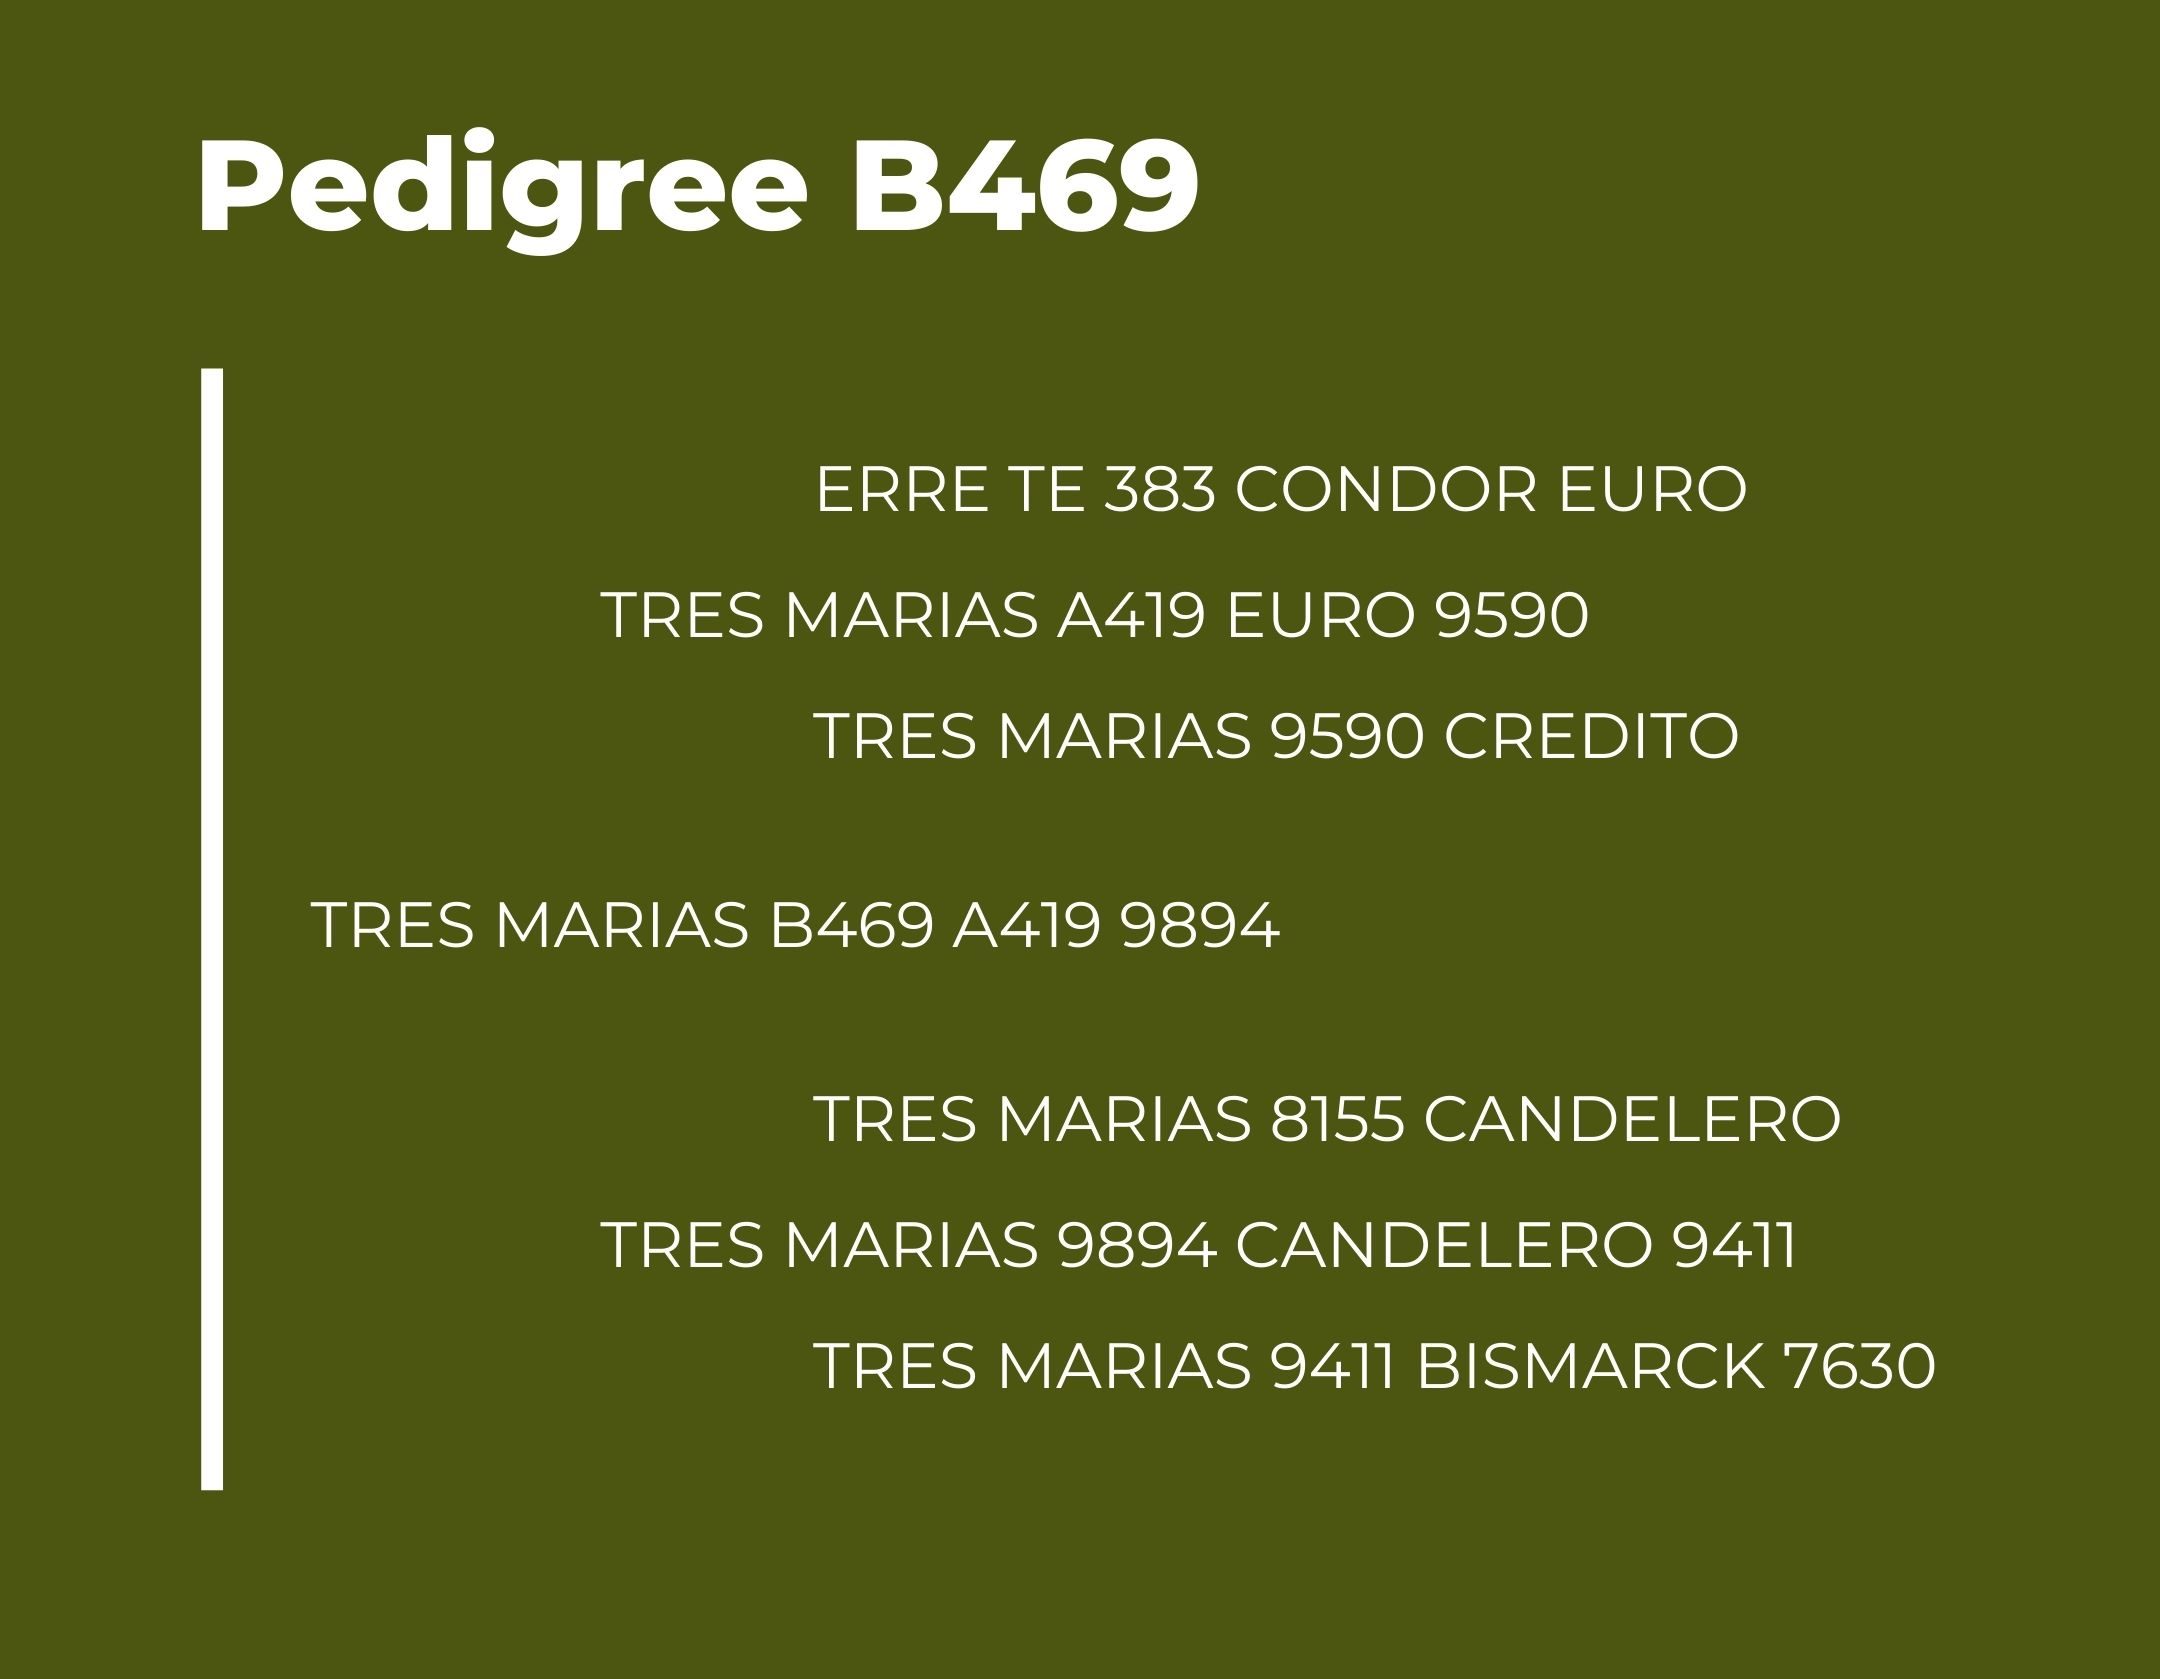 Catalogo Tres Marias Pedigree B469 ok